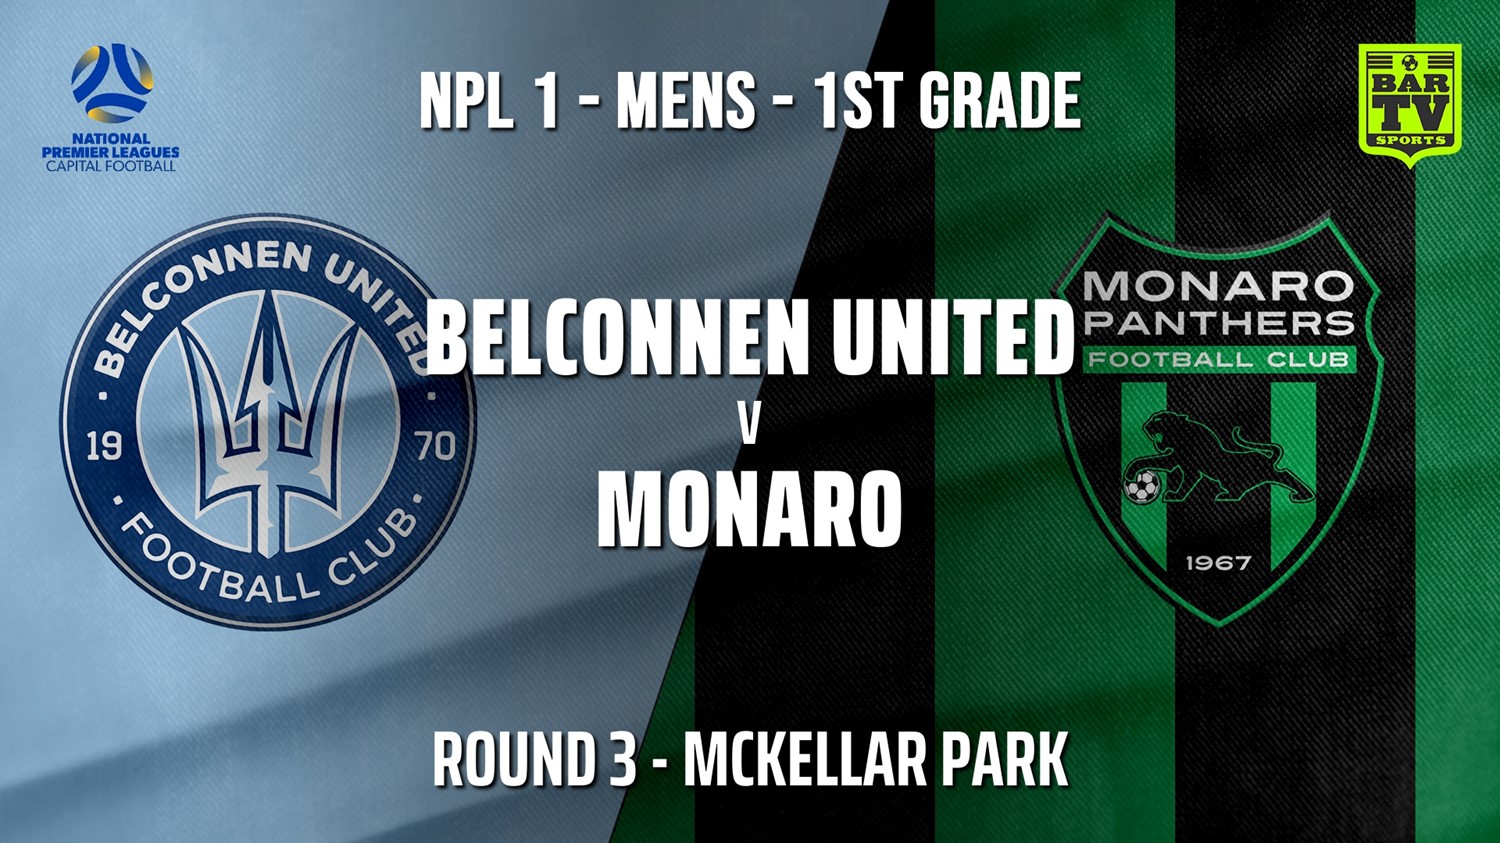 210422-NPL - CAPITAL Round 3 - Belconnen United v Monaro Panthers FC Minigame Slate Image